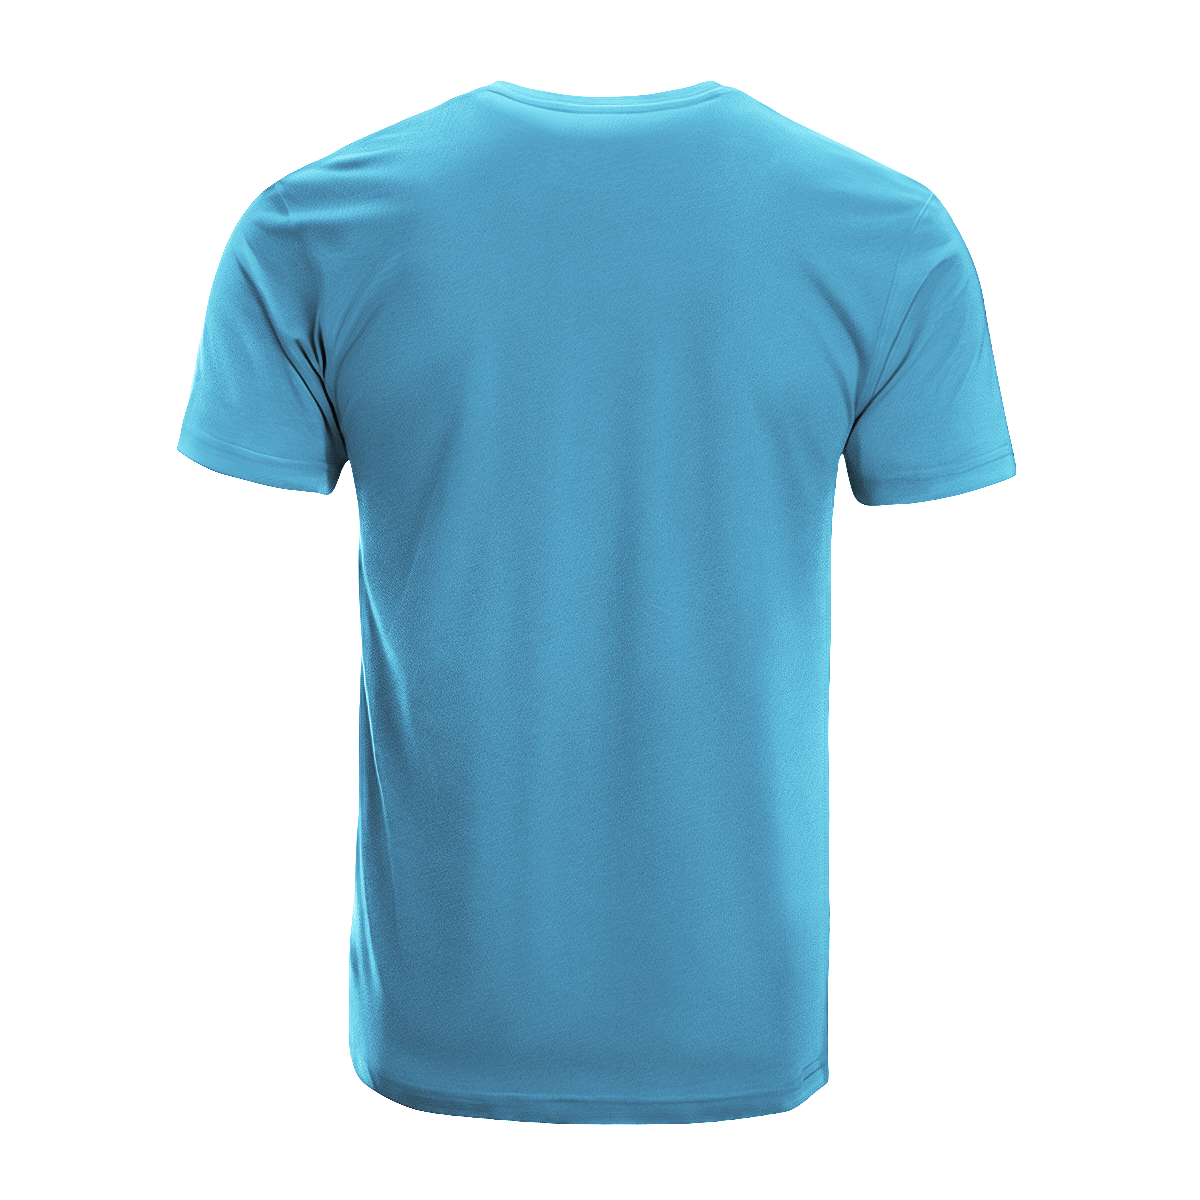 Hunter Tartan Crest T-shirt - I'm not yelling style